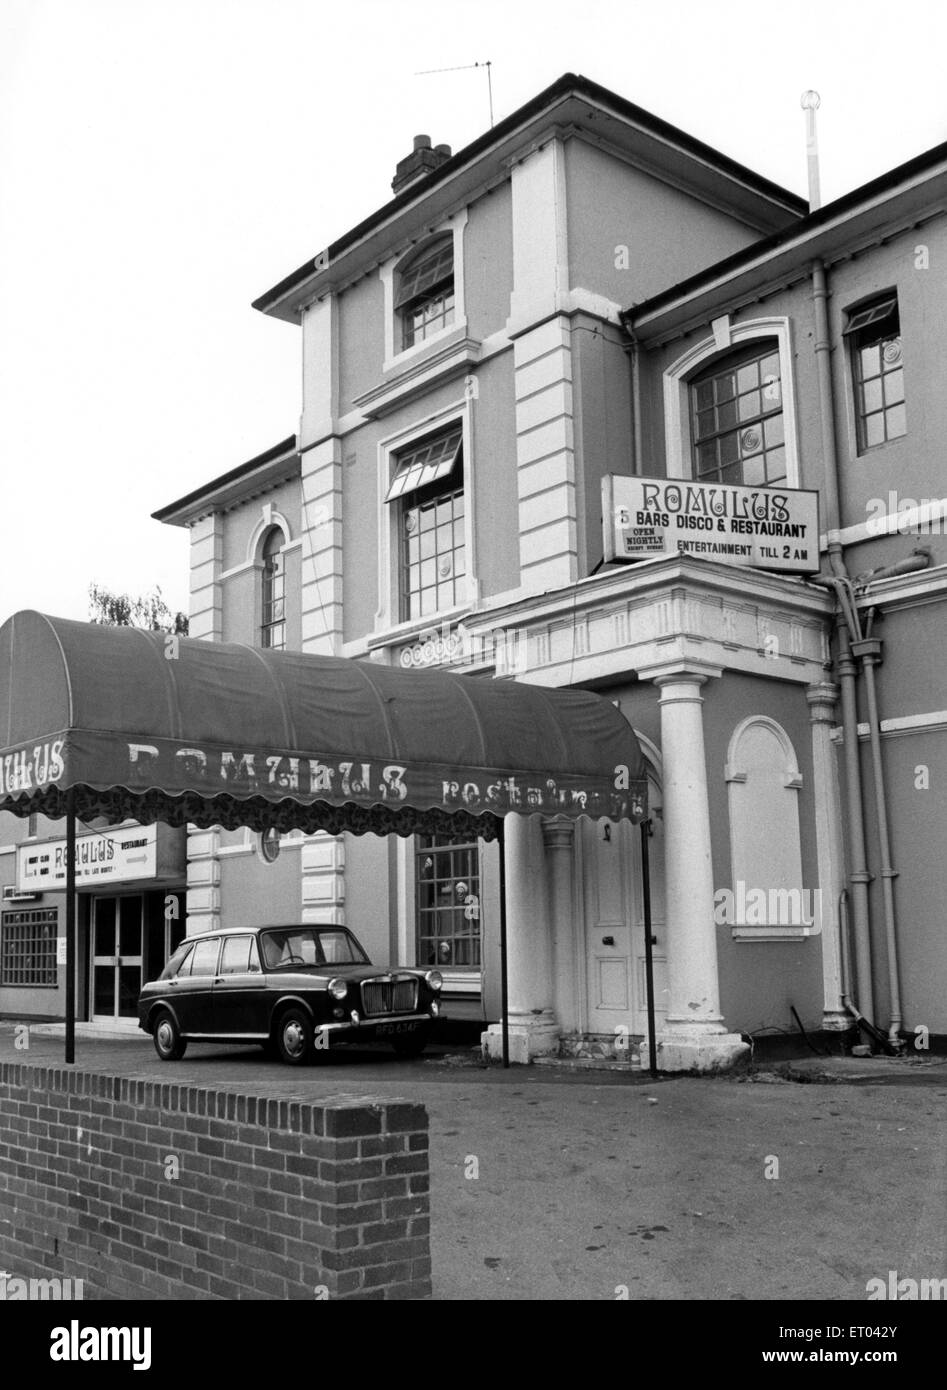 Romulus Disco and Restaurant. Circa 1970s. Stock Photo